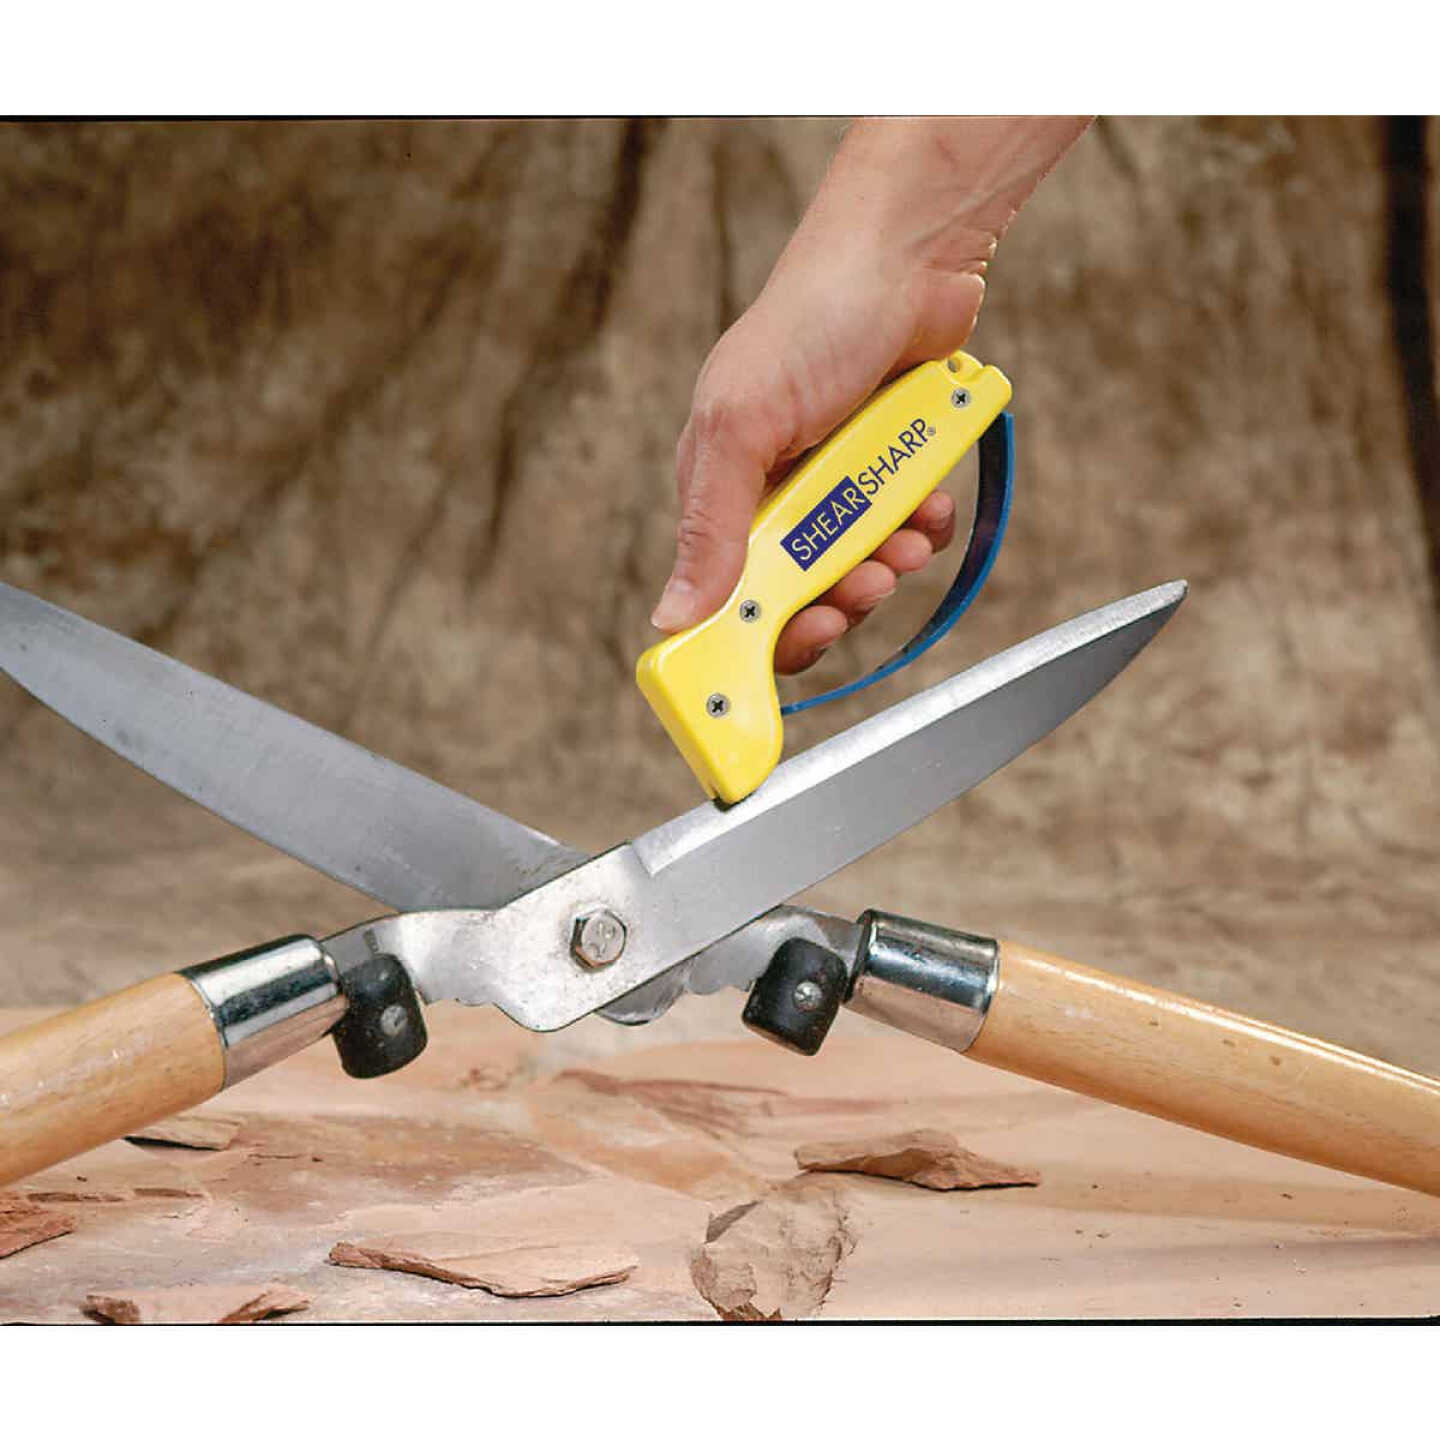 AccuSharp Carbide Knife and Tool Sharpener